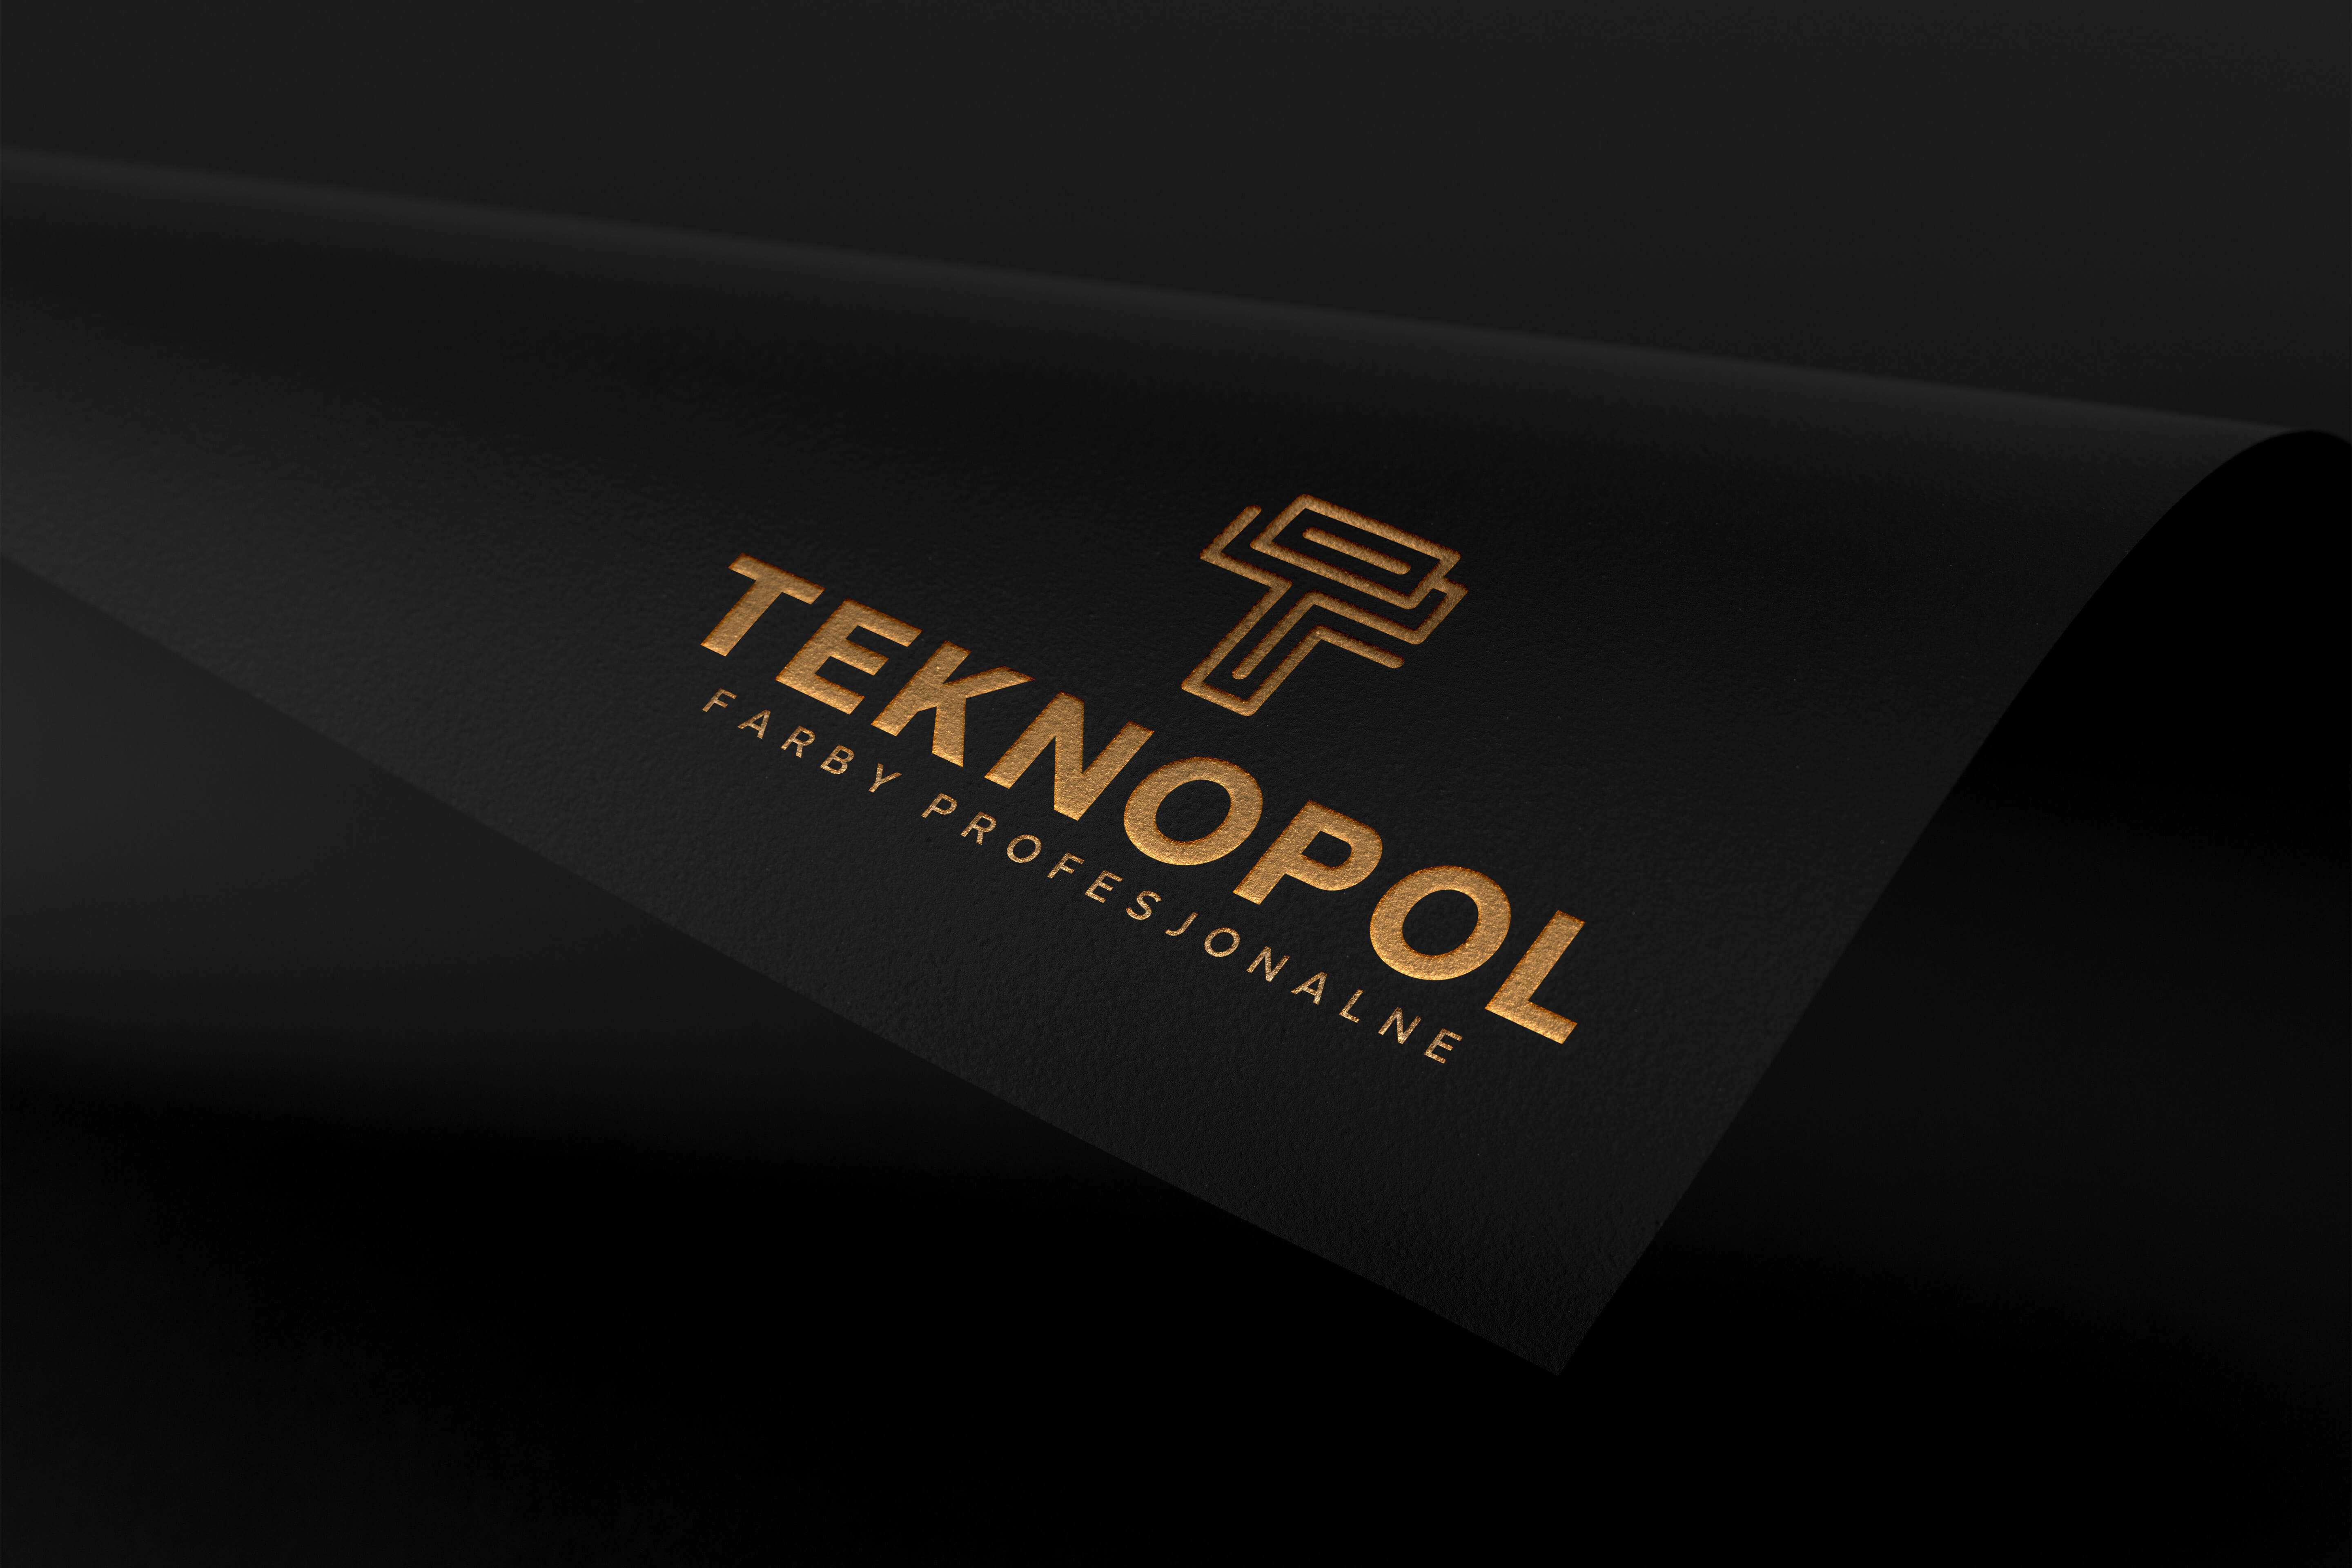 Teknopol - logo, Agencja Reklamy Prestige